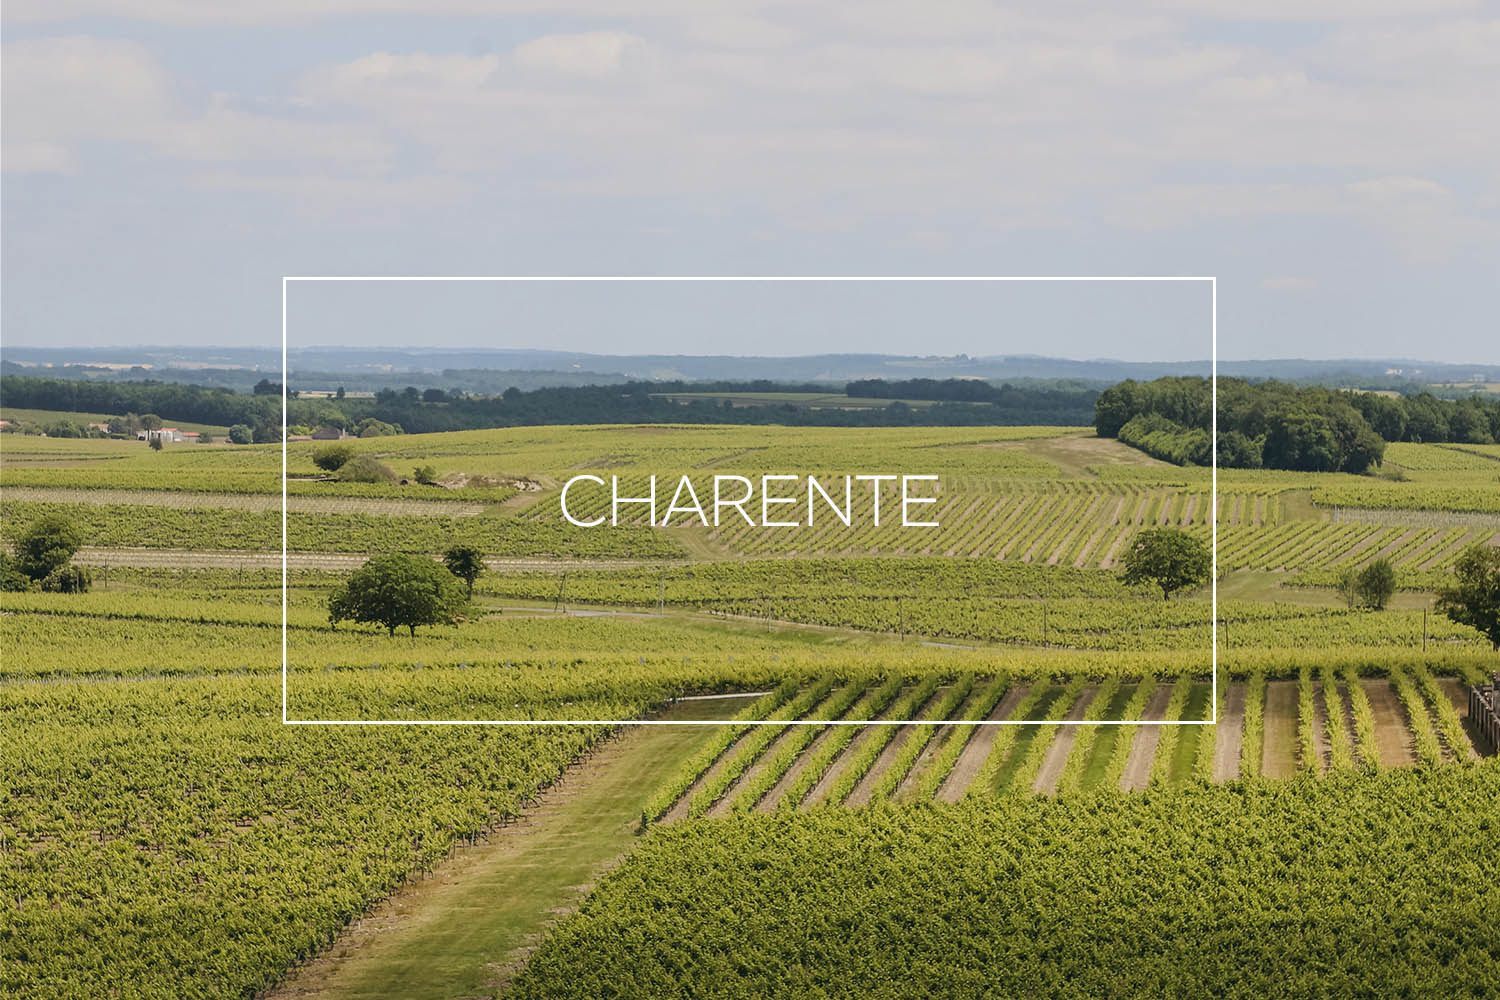 Visite Charente